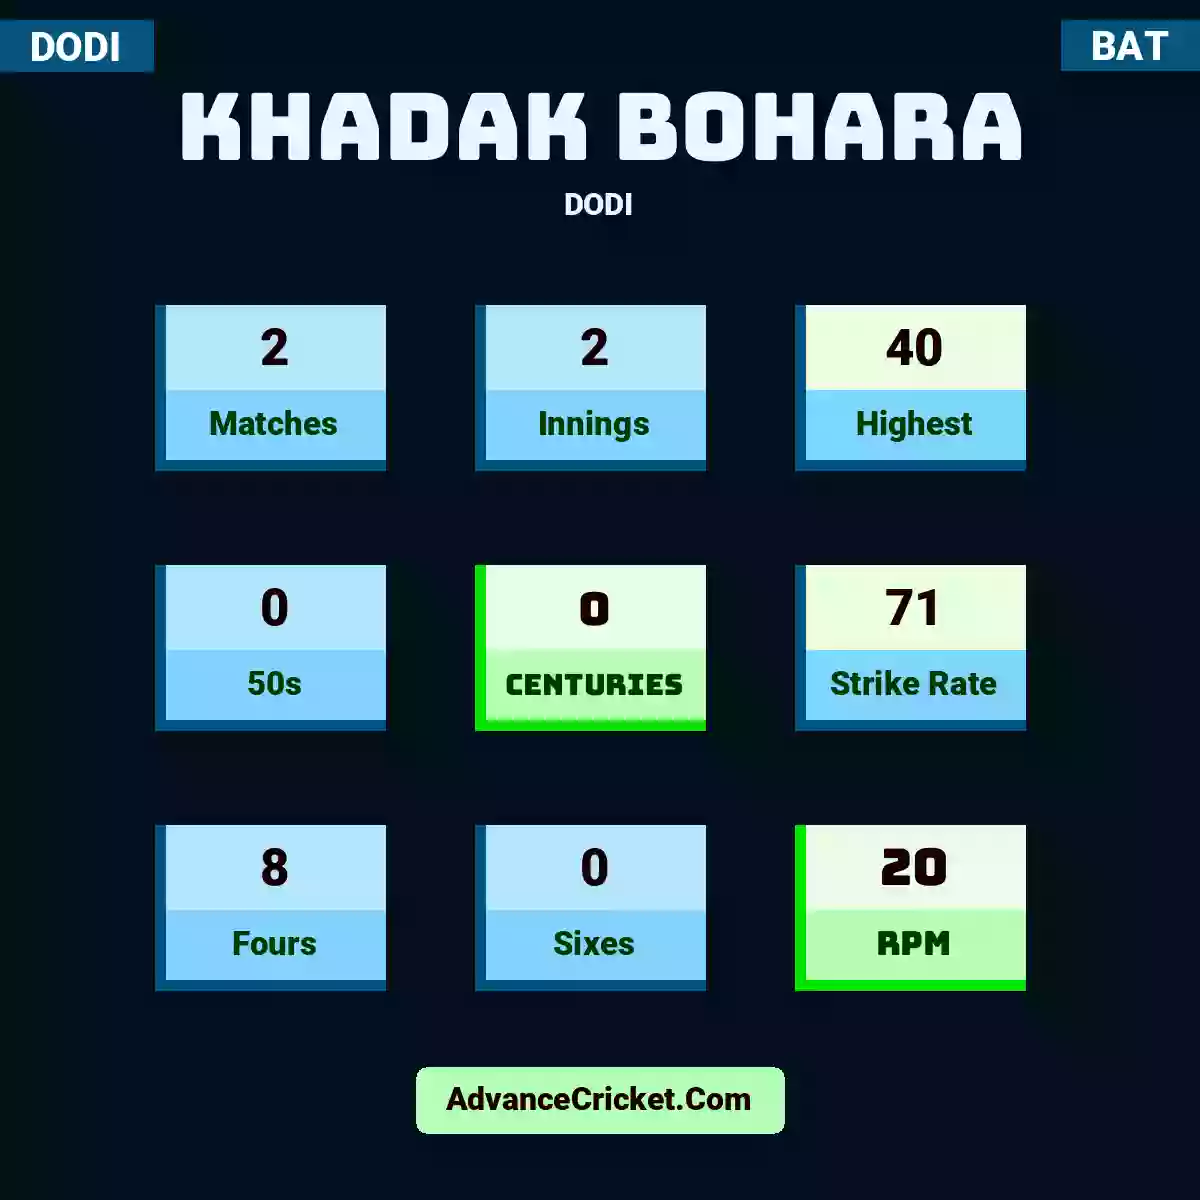 Khadak Bohara DODI , Khadak Bohara played 2 matches, scored 40 runs as highest, 0 half-centuries, and 0 centuries, with a strike rate of 71. K.Bohara hit 8 fours and 0 sixes, with an RPM of 20.